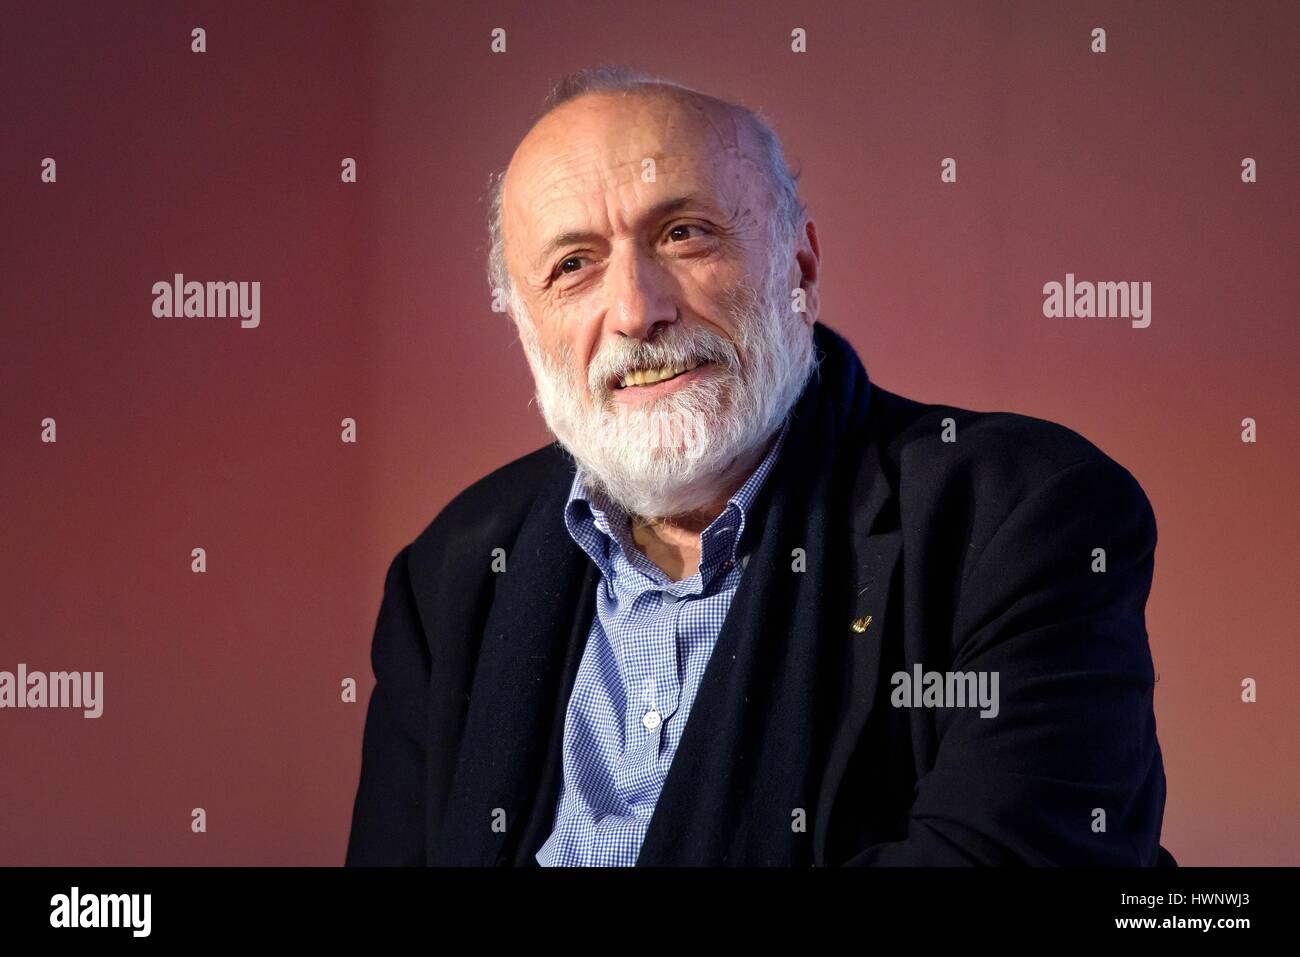 Carlo Petrini fondateur de Slow Food Crédit © Luciano Movio/Sintesi/Alamy Stock Photo Banque D'Images